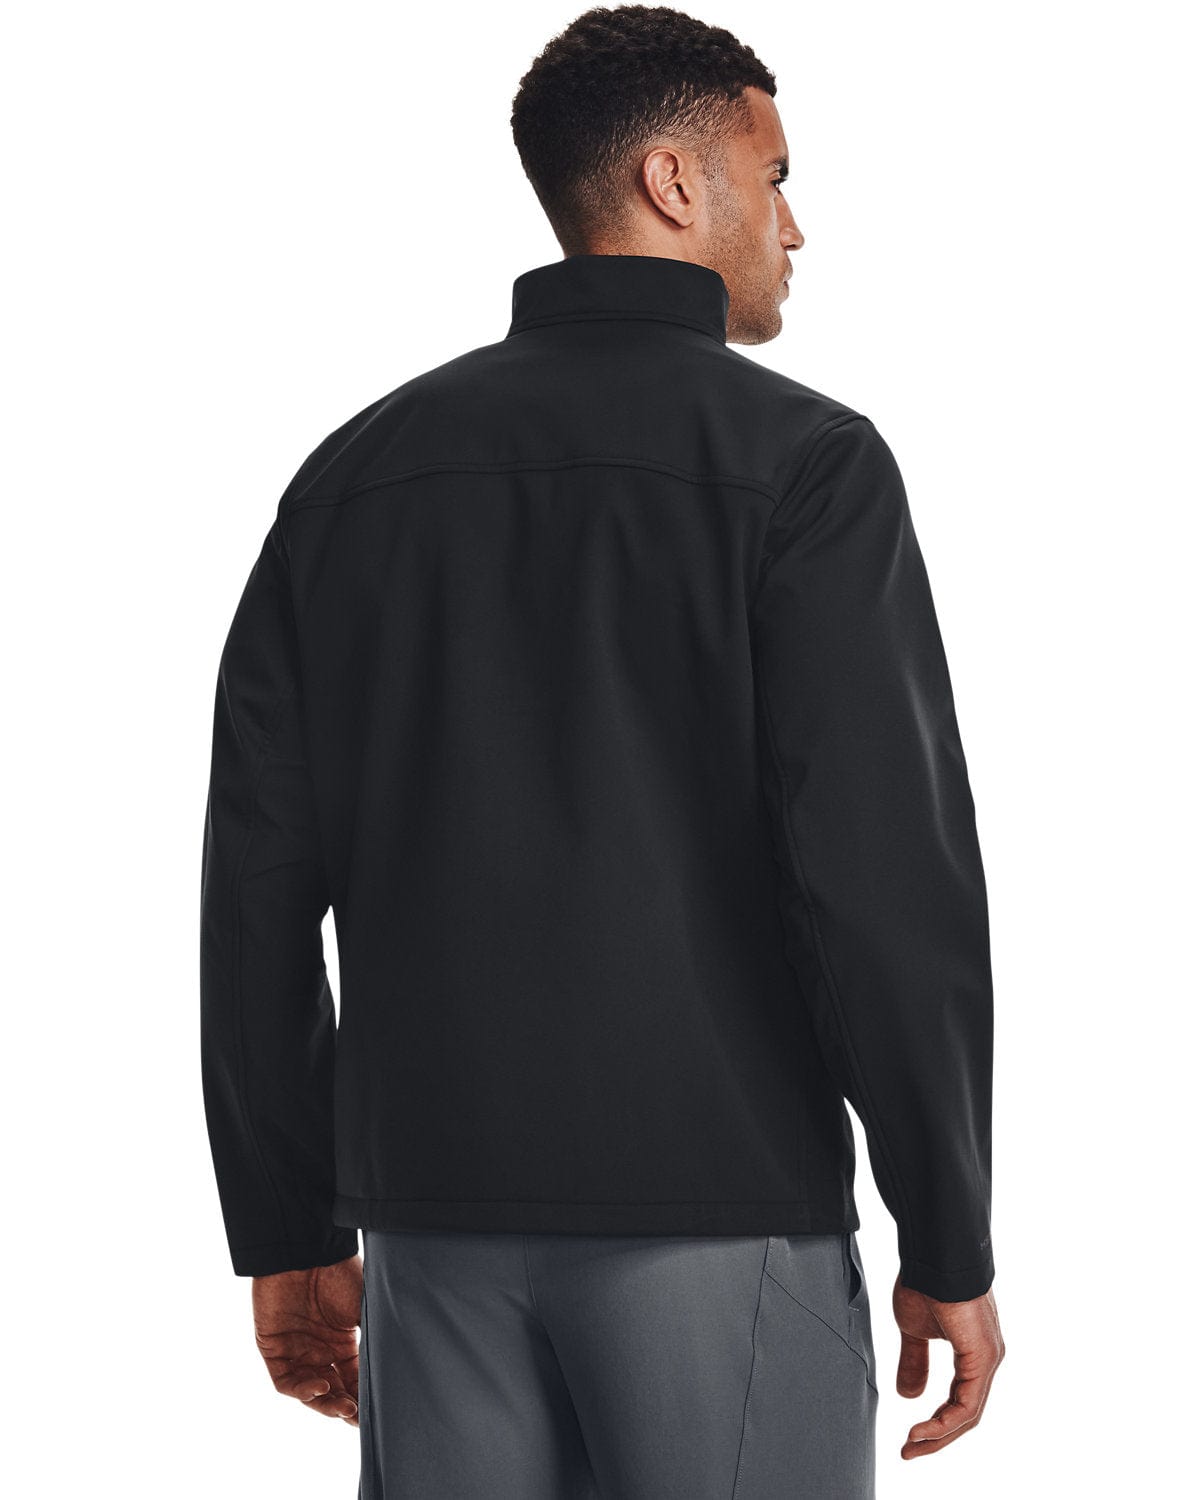 Buy Under Armour Men's UA Storm ColdGear® Infrared Shield Jacket